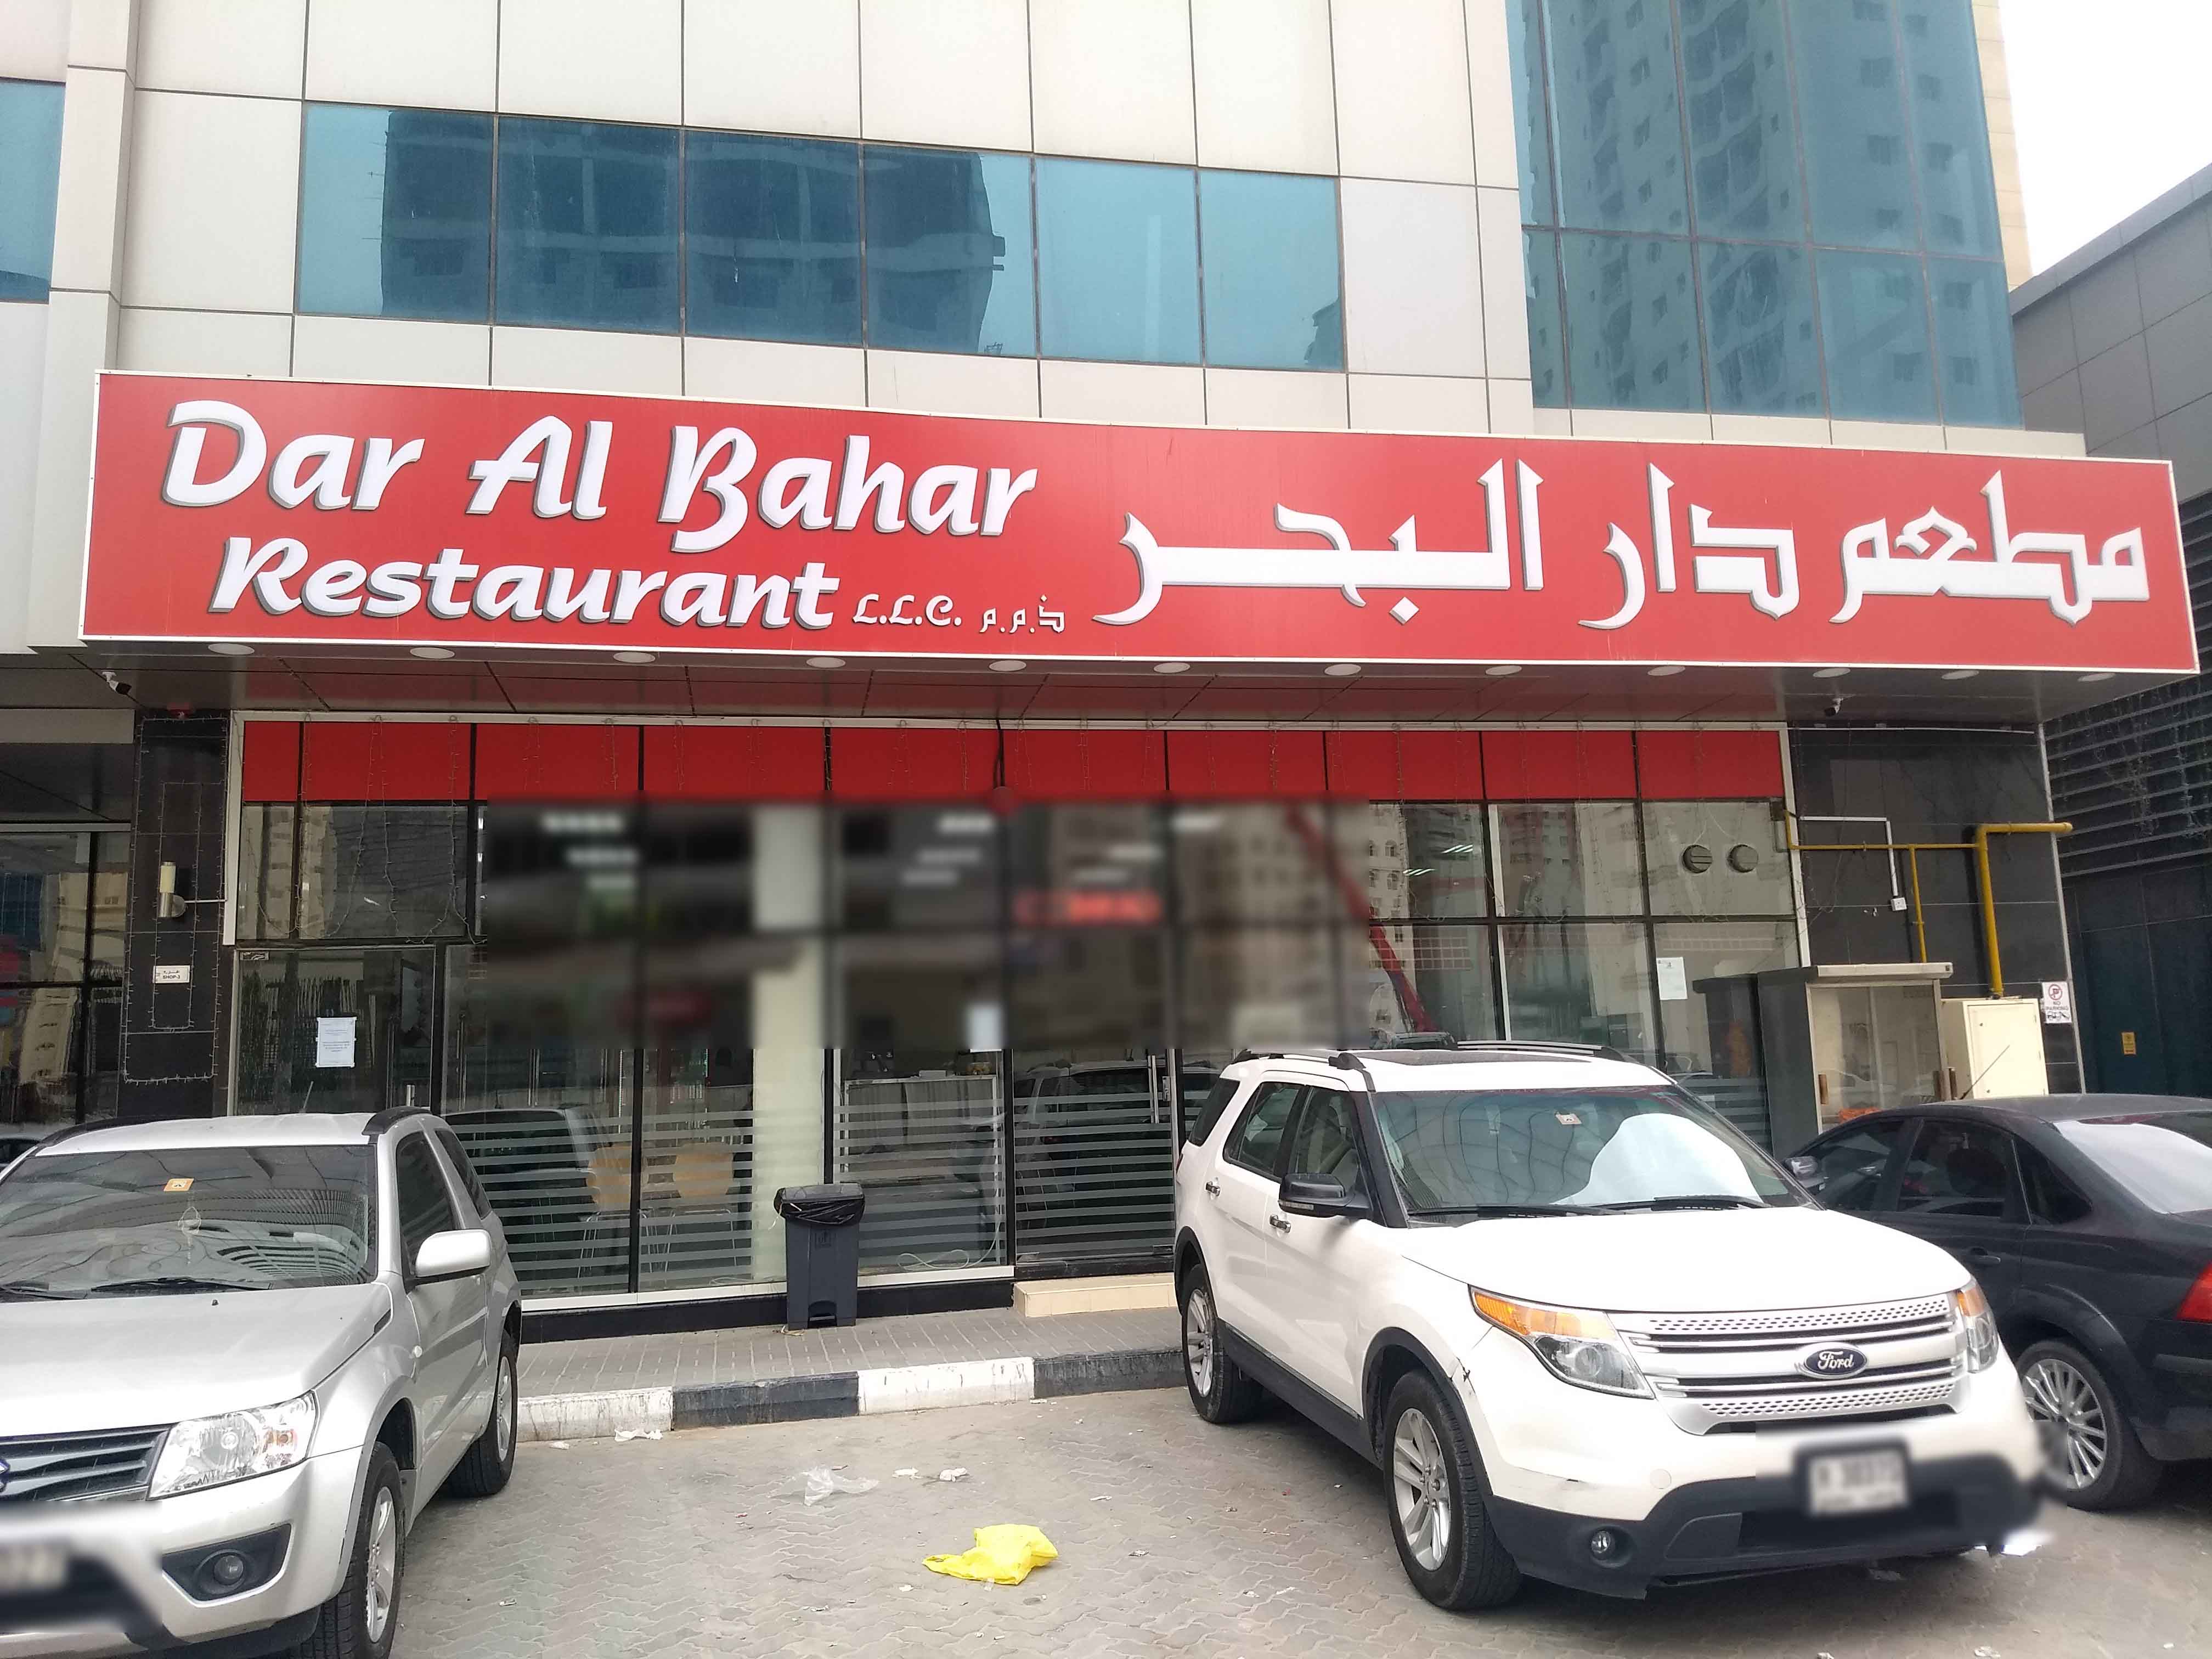 Alliwa' Al'akhdar Restaurant Delivery Menu in Al Bahar